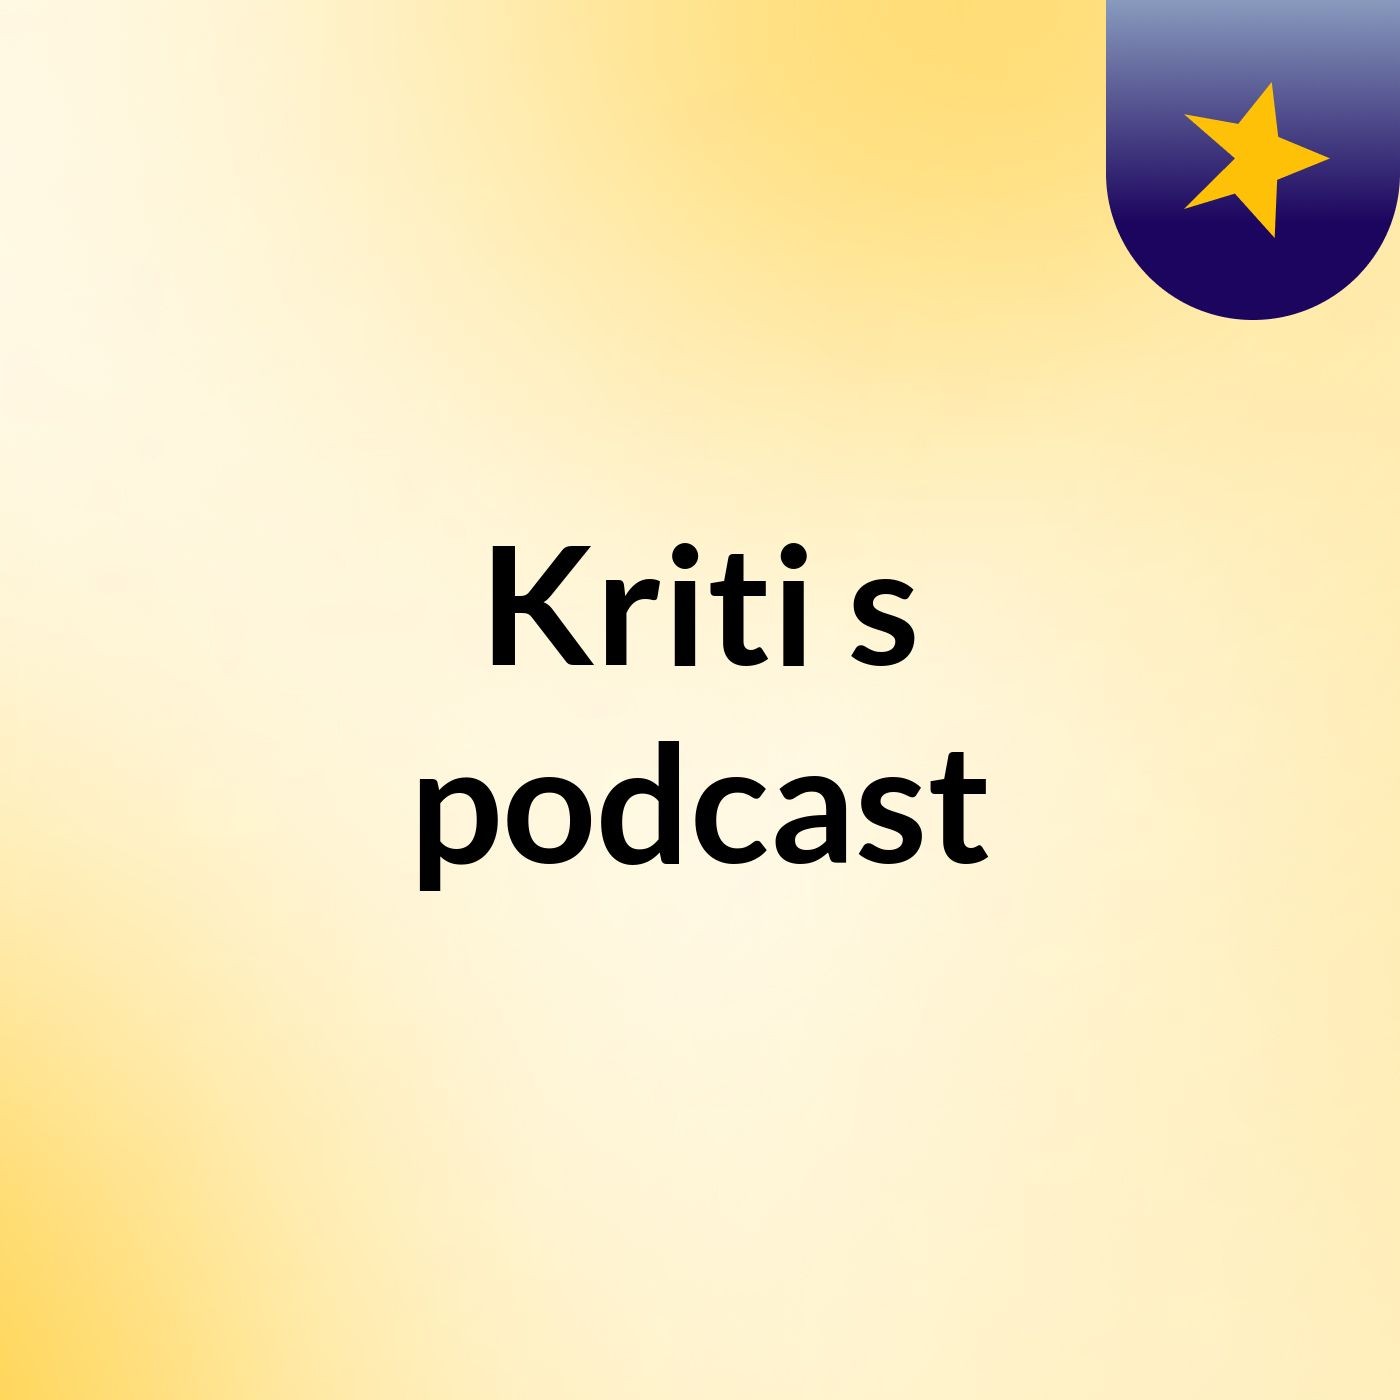 Kriti's podcast